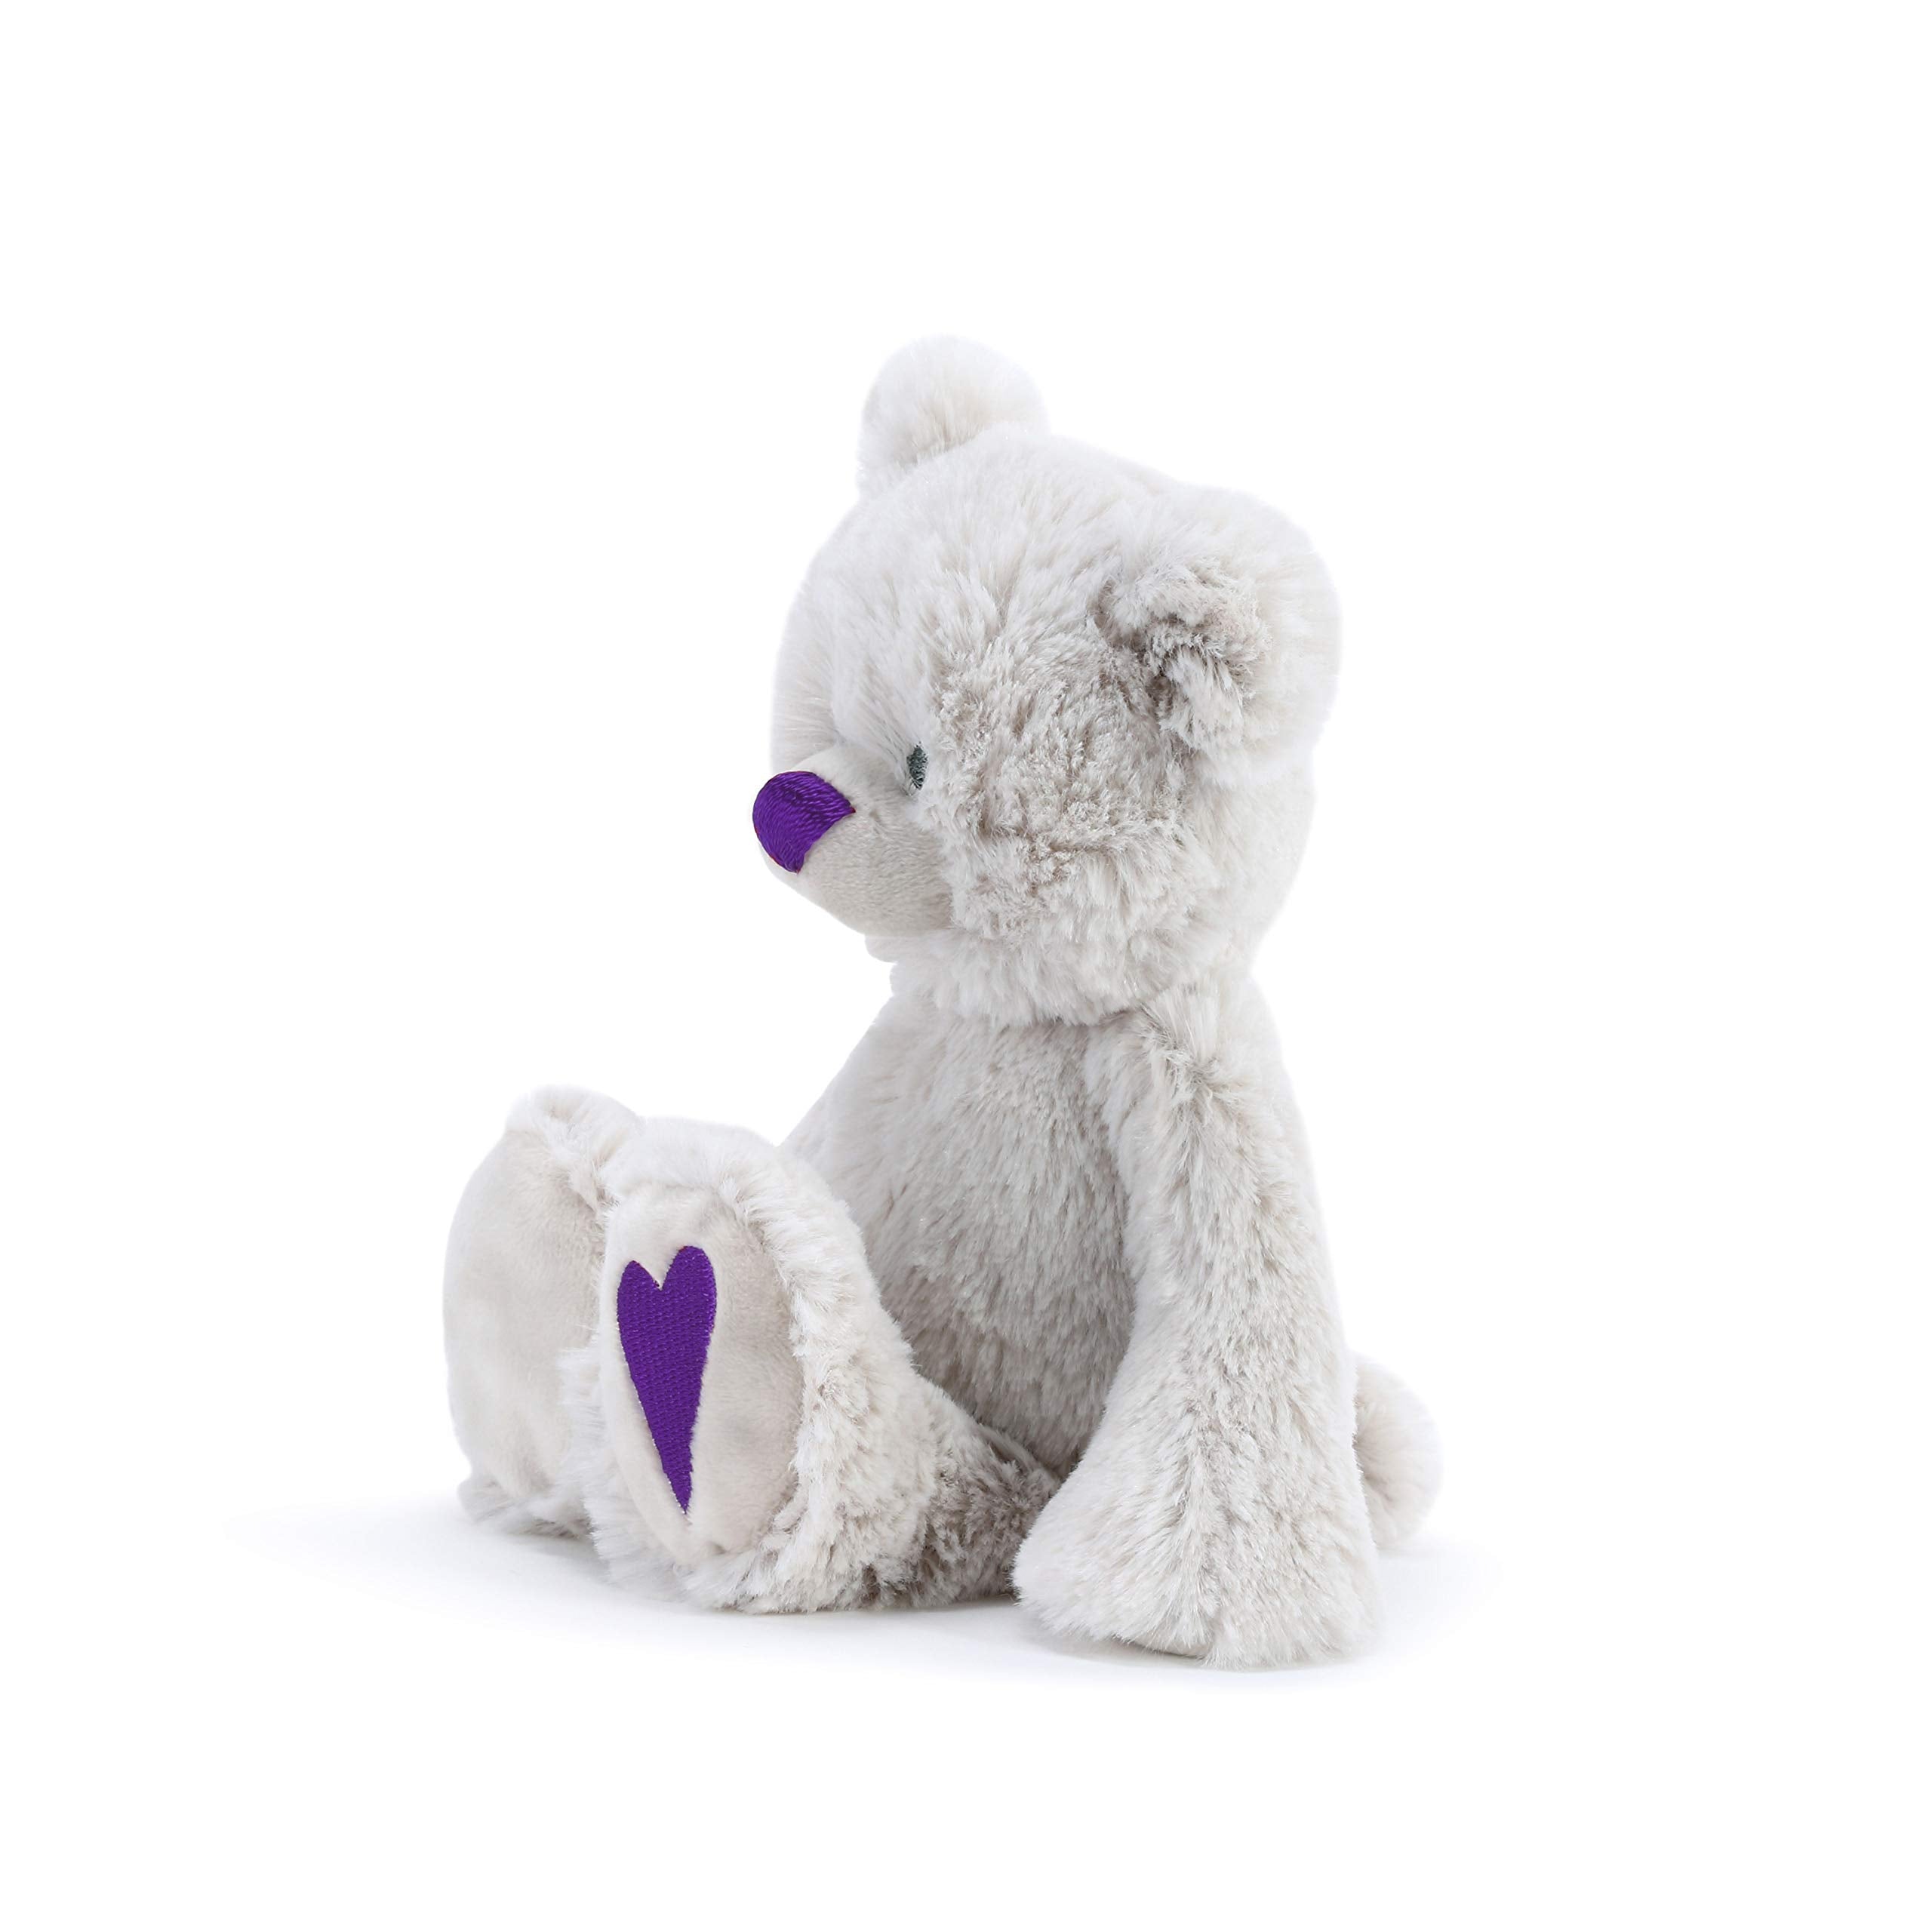 DEMDACO Curious Purple Amethyst Color February Birthstone 8.5 inch Children's Plush Stuffed Animal Toy